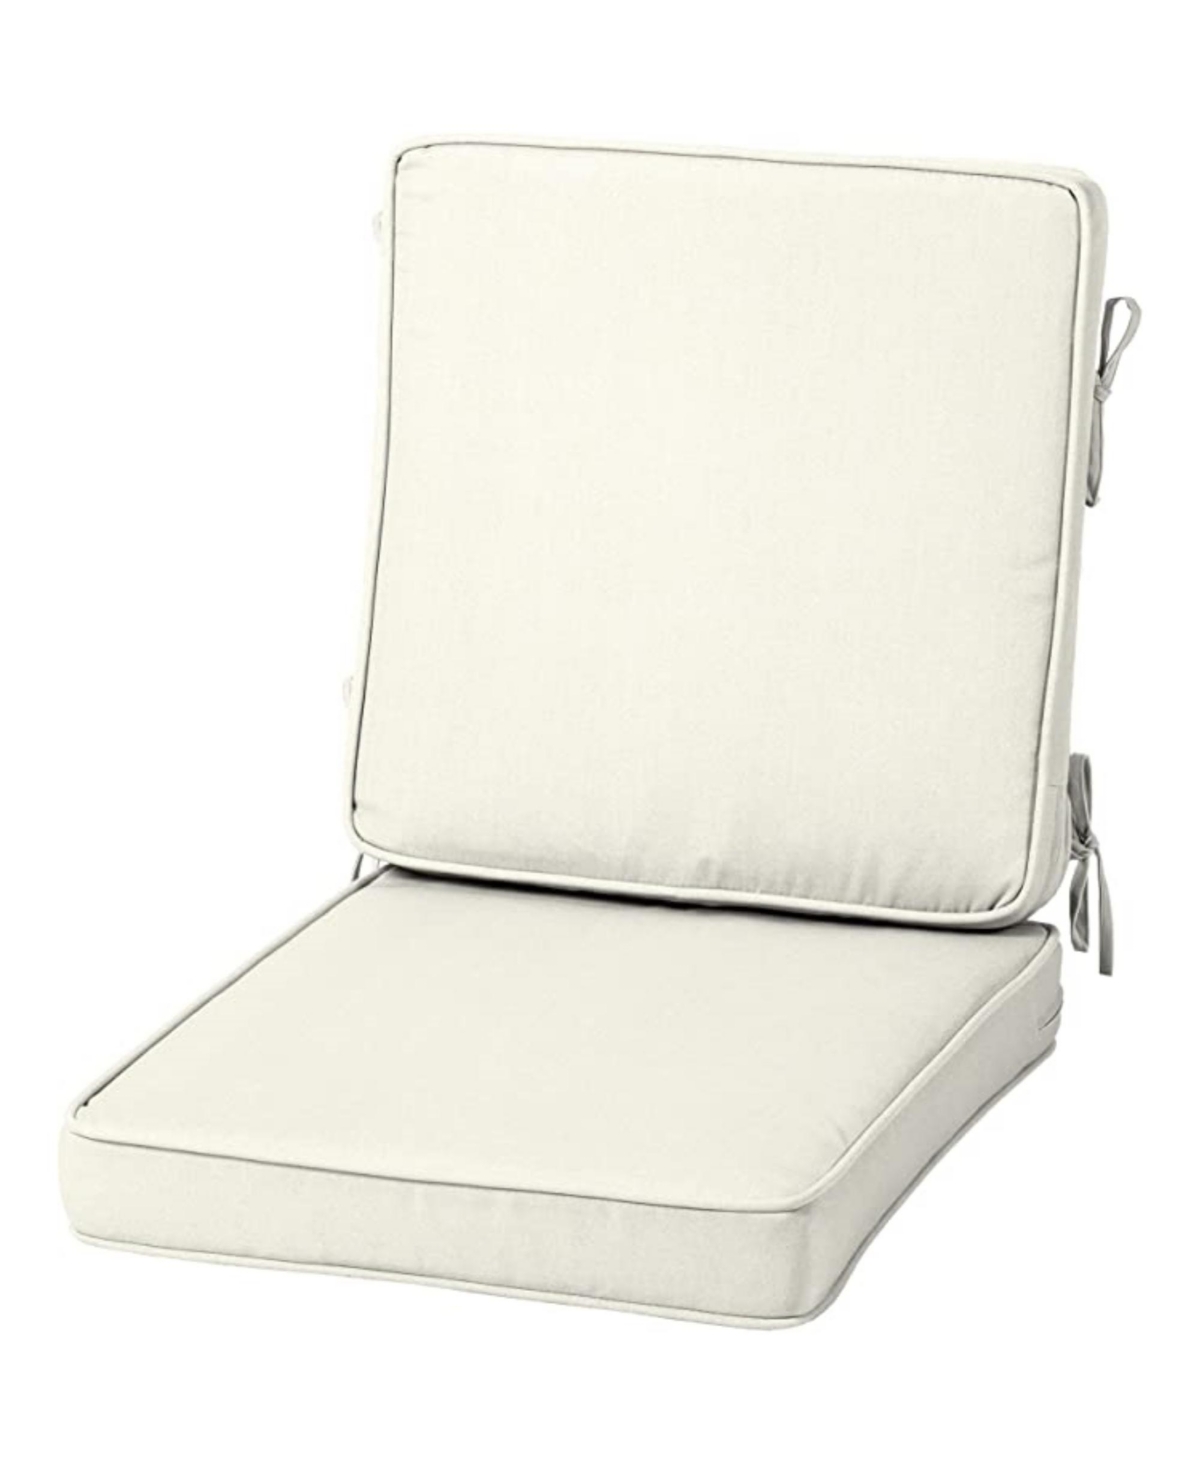 Acrylic Foam Chair Cushion 20In x 20In Cream - White